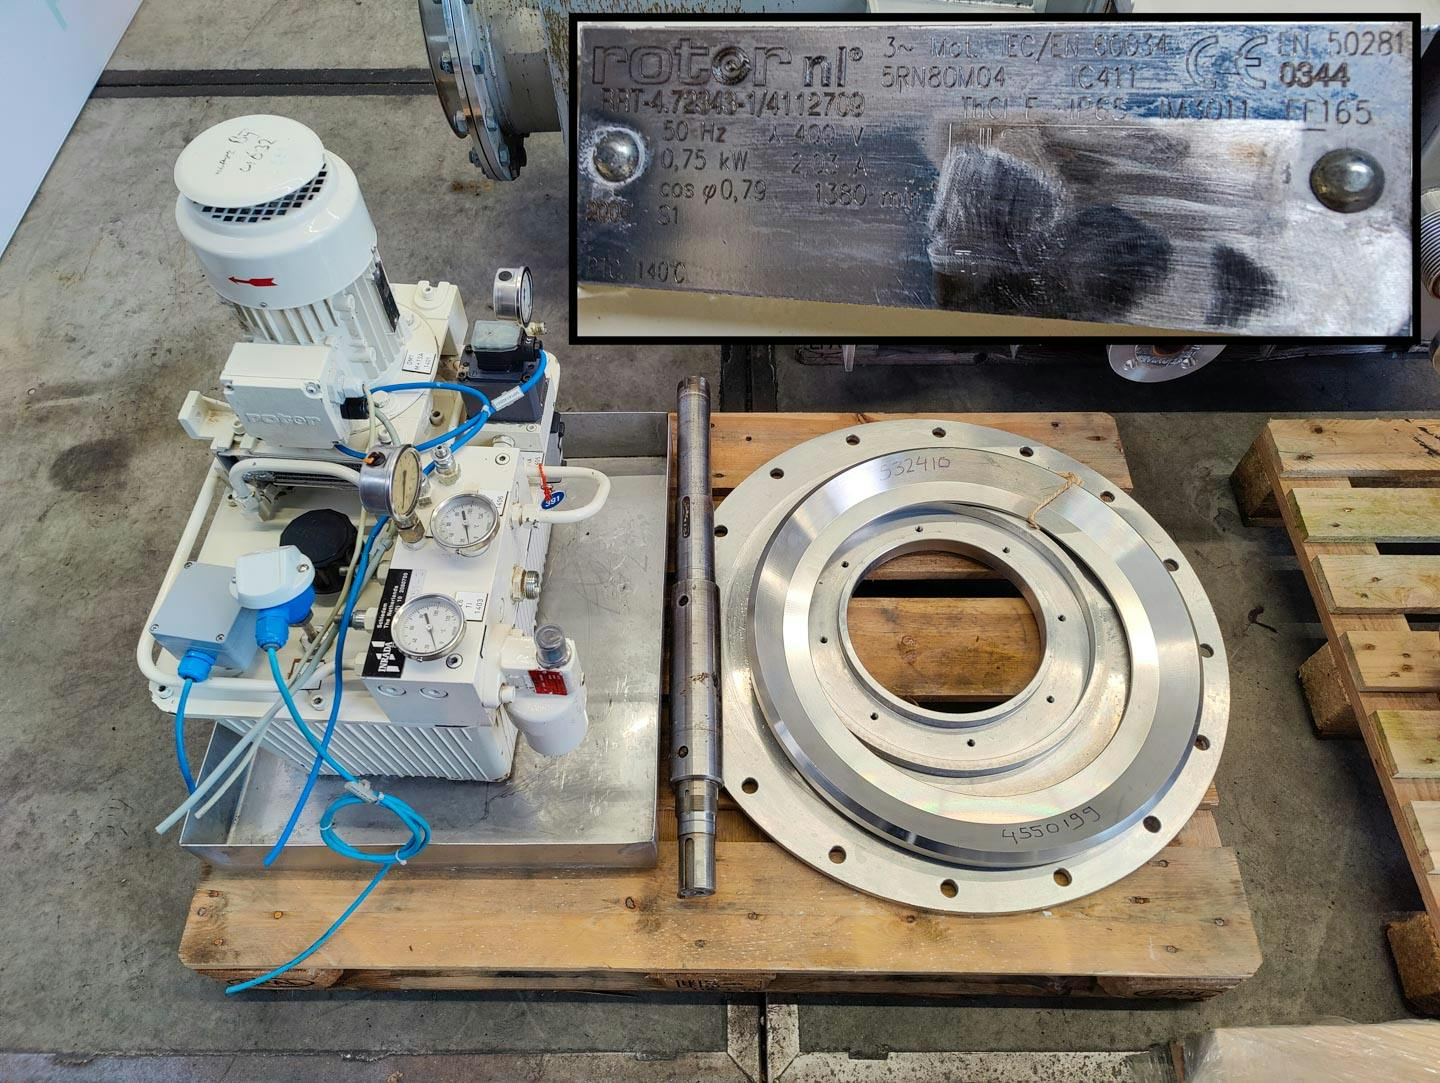 Hosokawa Micron DMR-2H FLASH-DROGER - Drying system - Continuous dryer - image 11